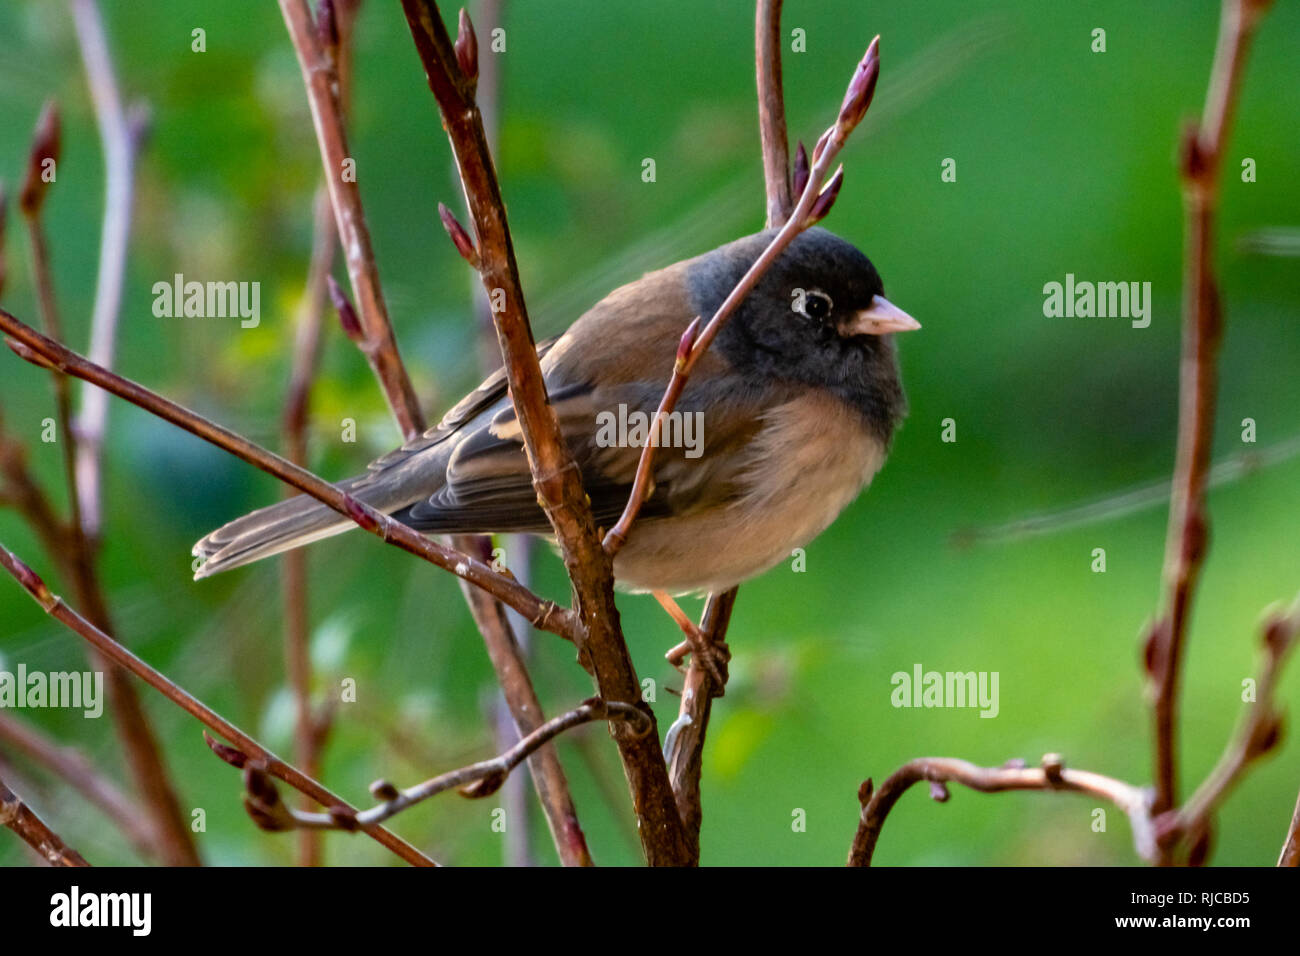 Junco bird on a branch, Canada Stock Photo